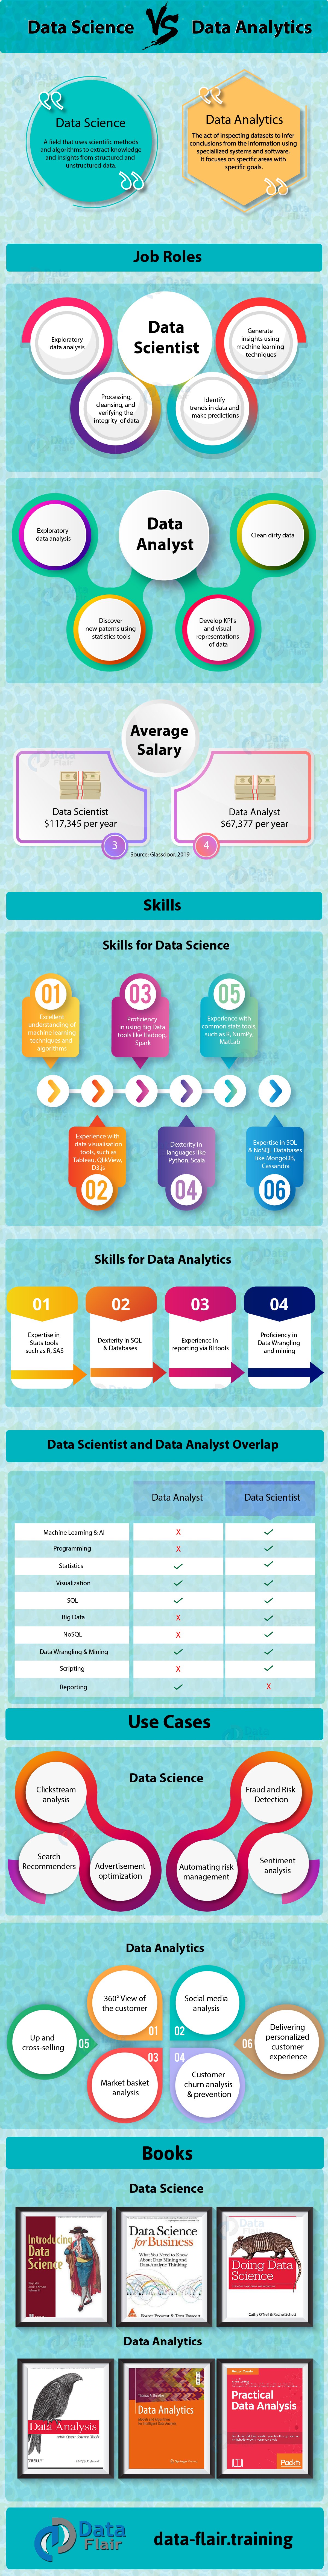 Data Science vs Data Analytics Infographic - Choose Your Career - DataFlair